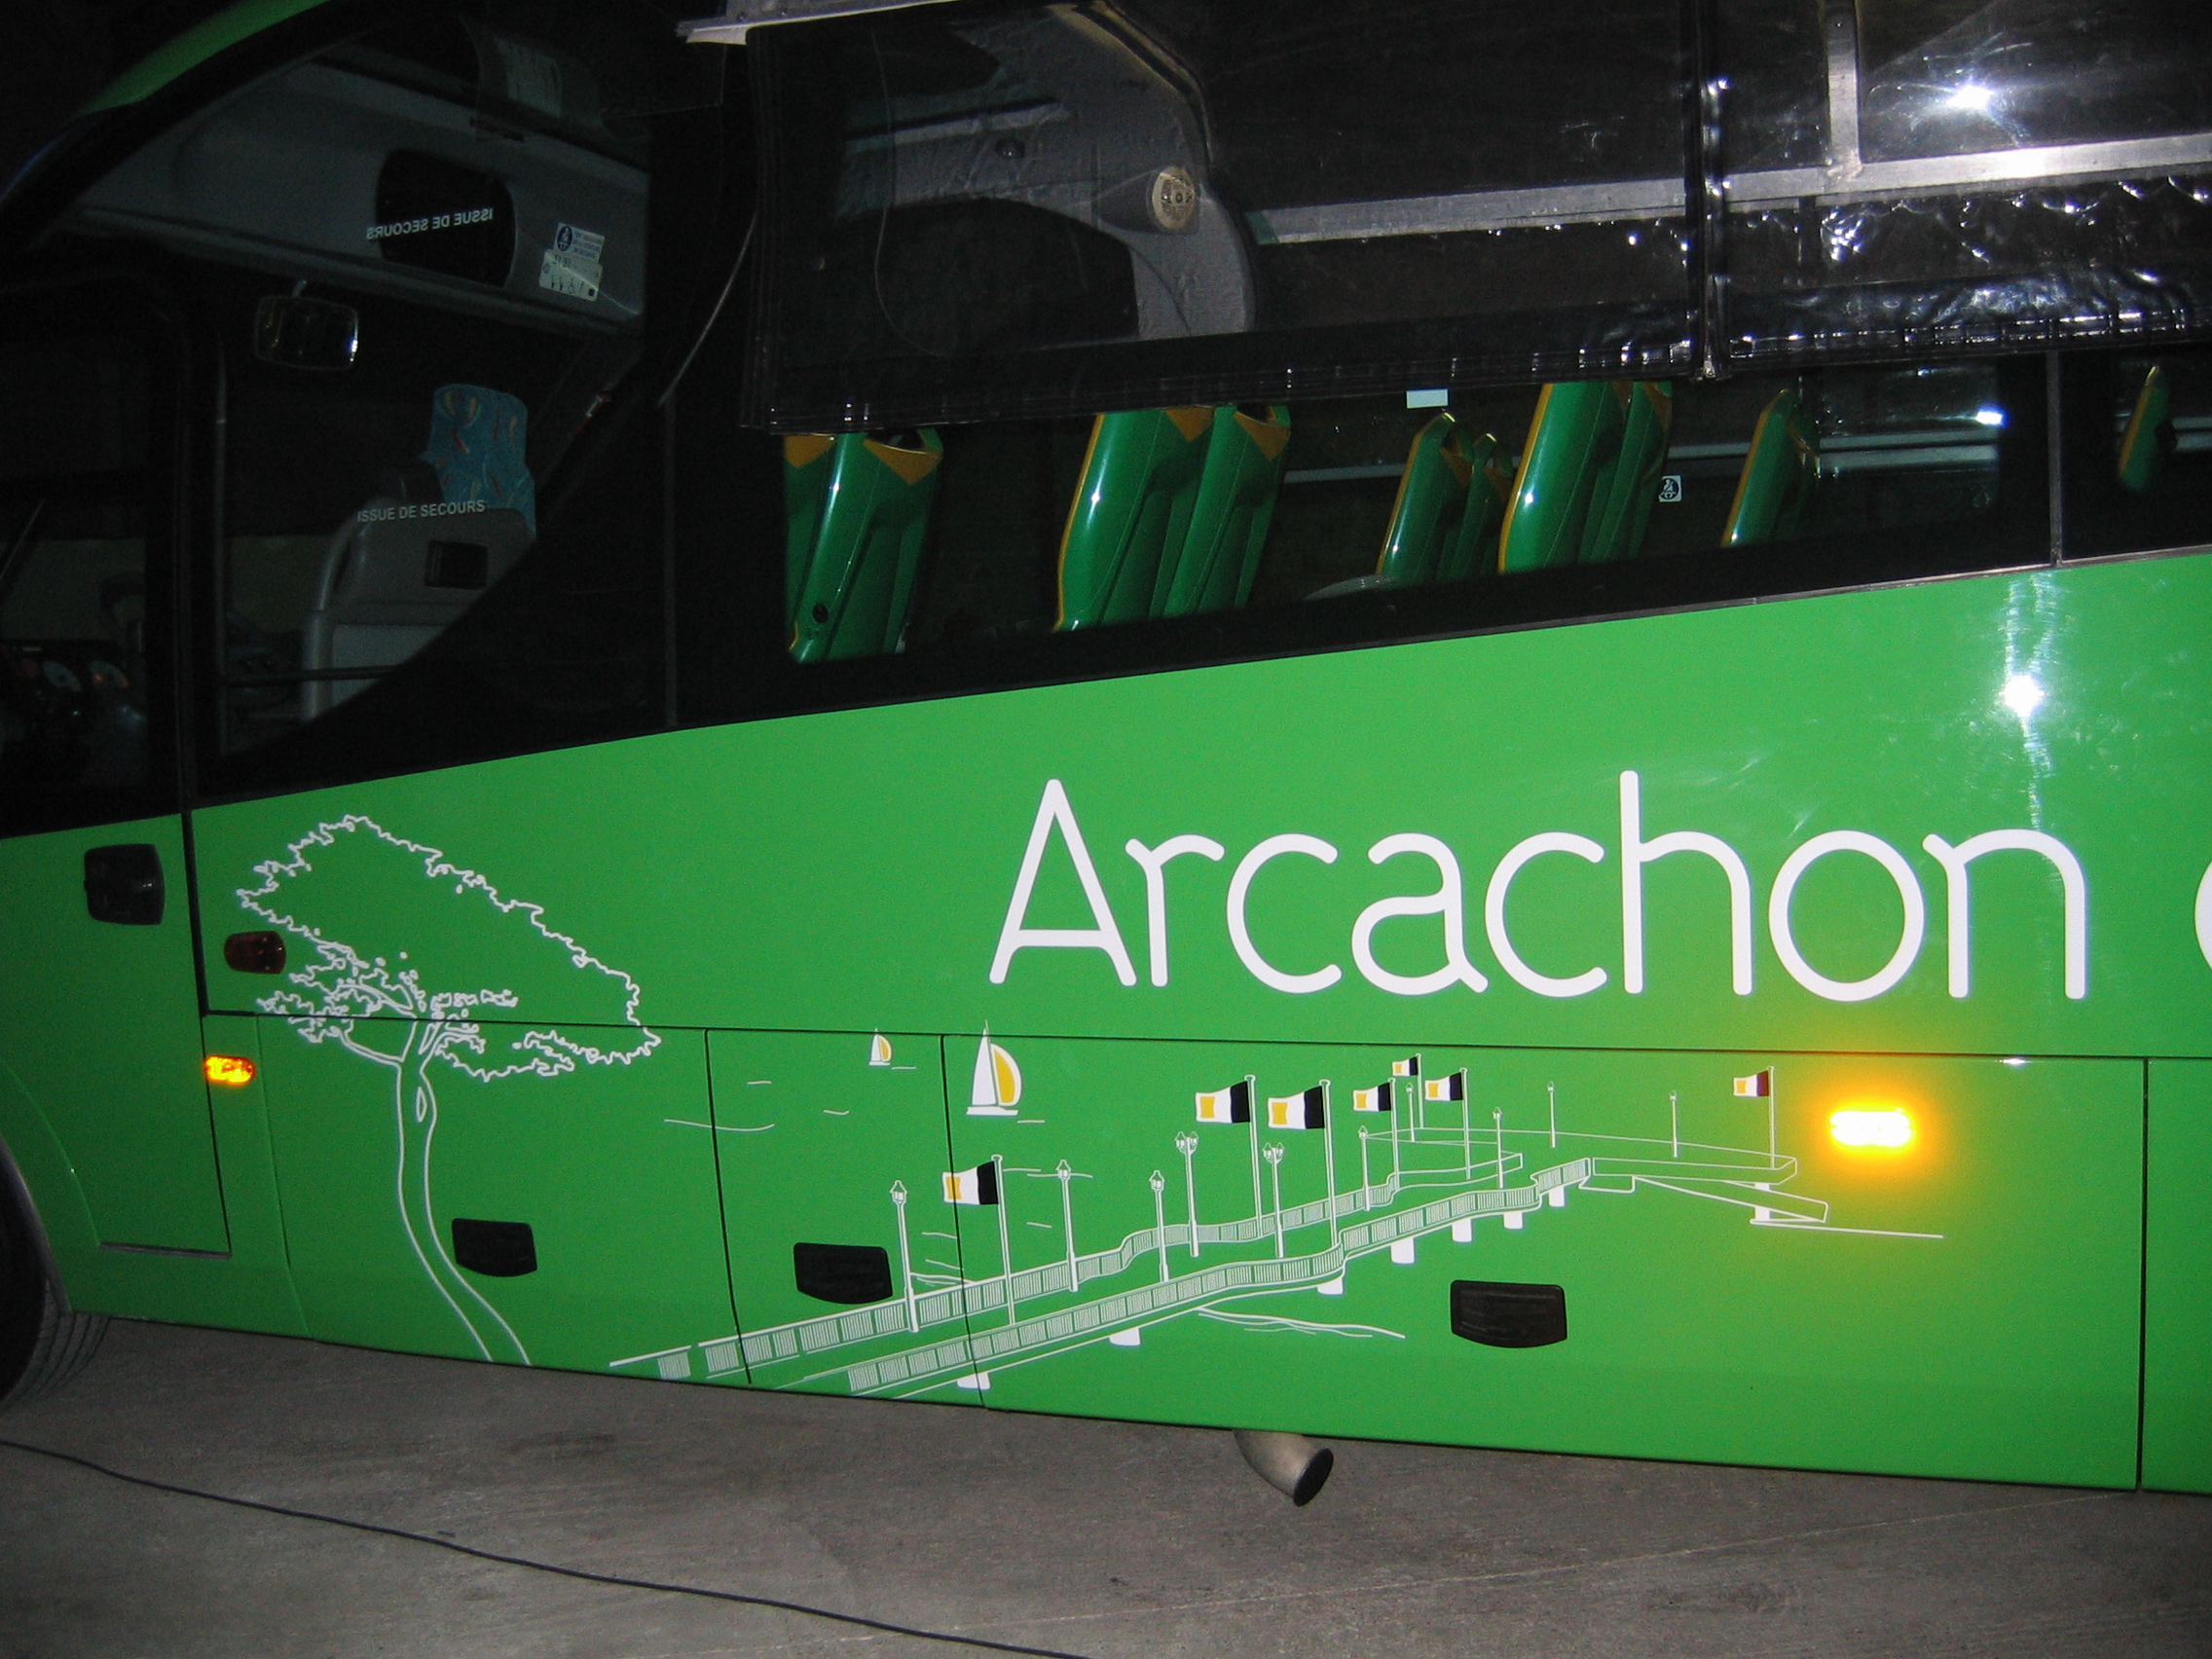 Bus Arcachon 001